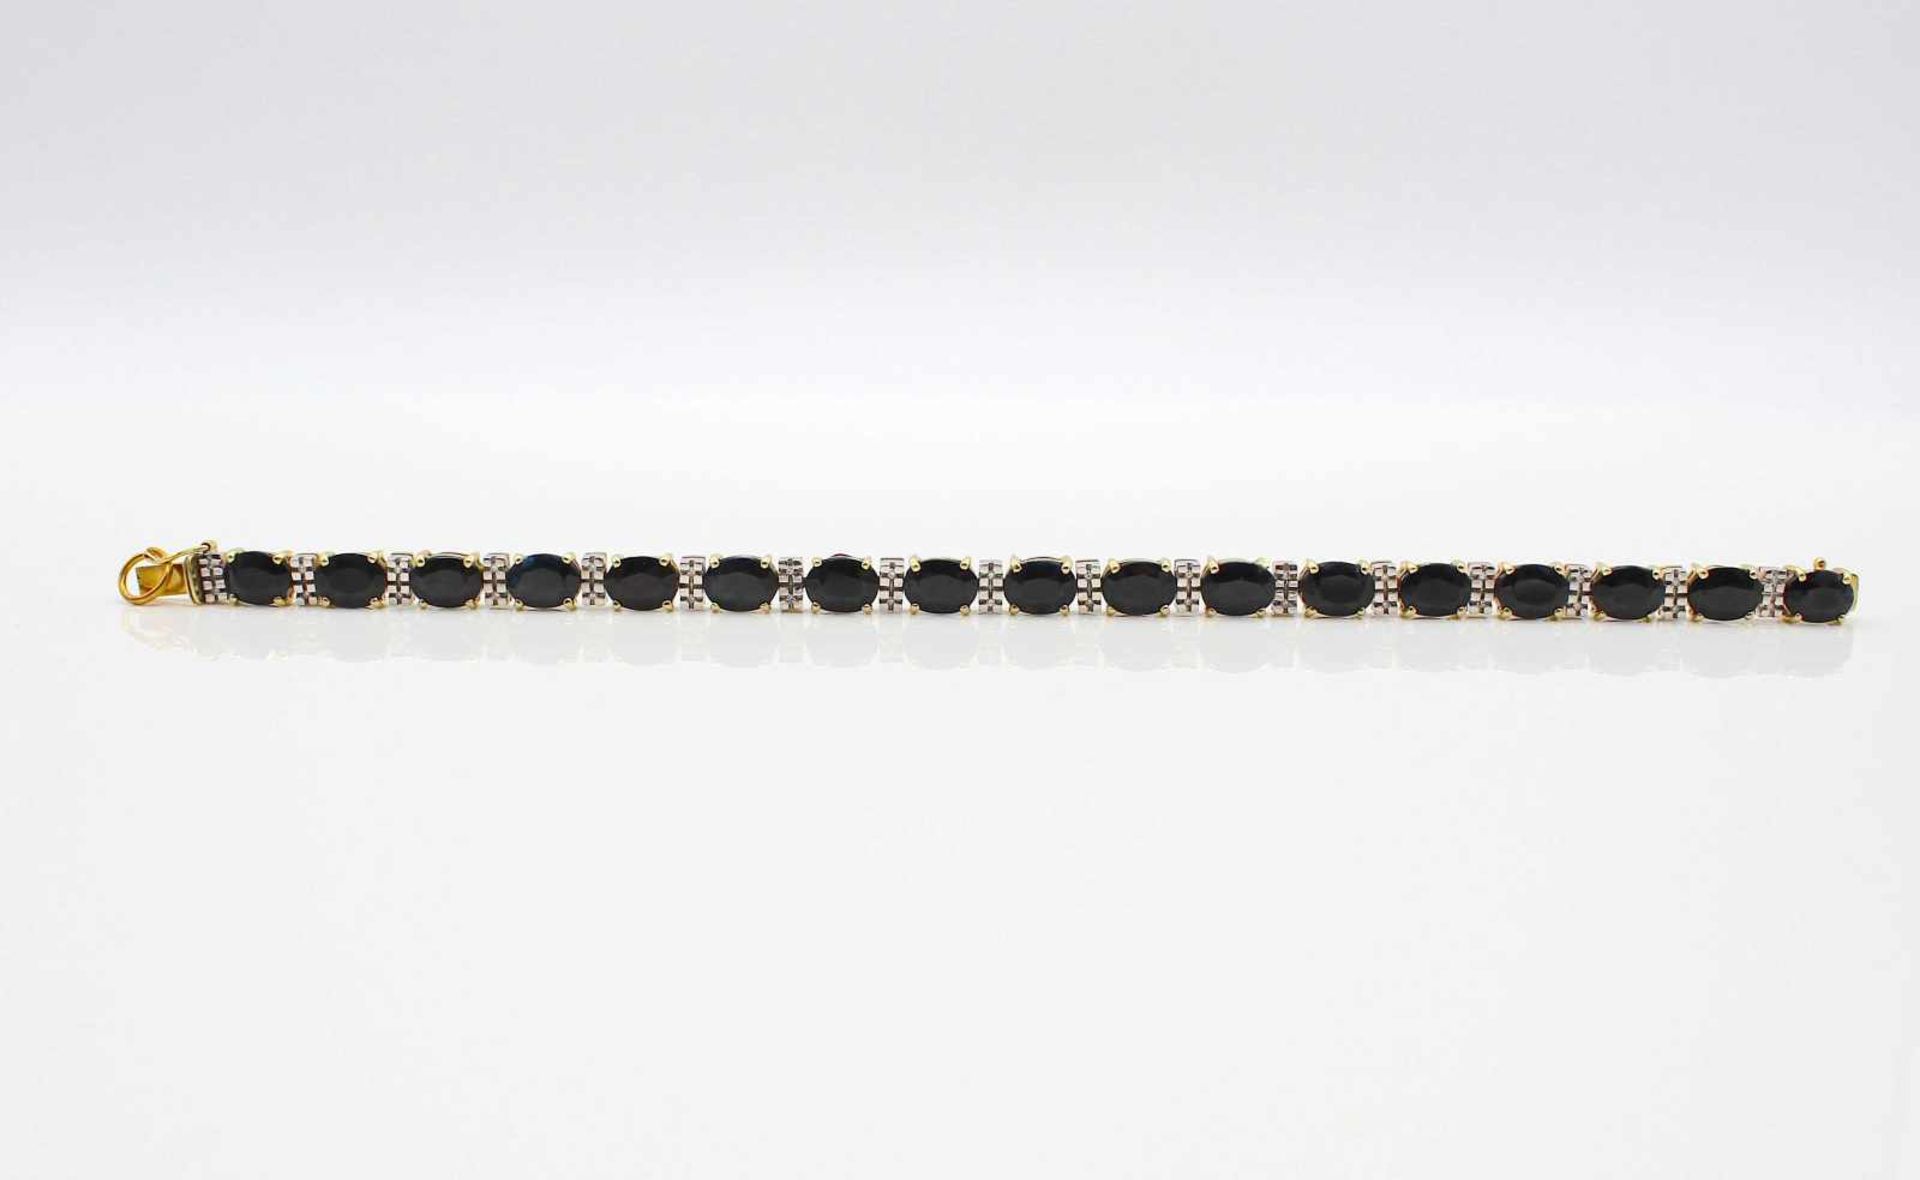 Armband 585 Gold bicolor mit 17 Saphiren, ca. 22,46 ct, Länge 18,5 cm, 17 g